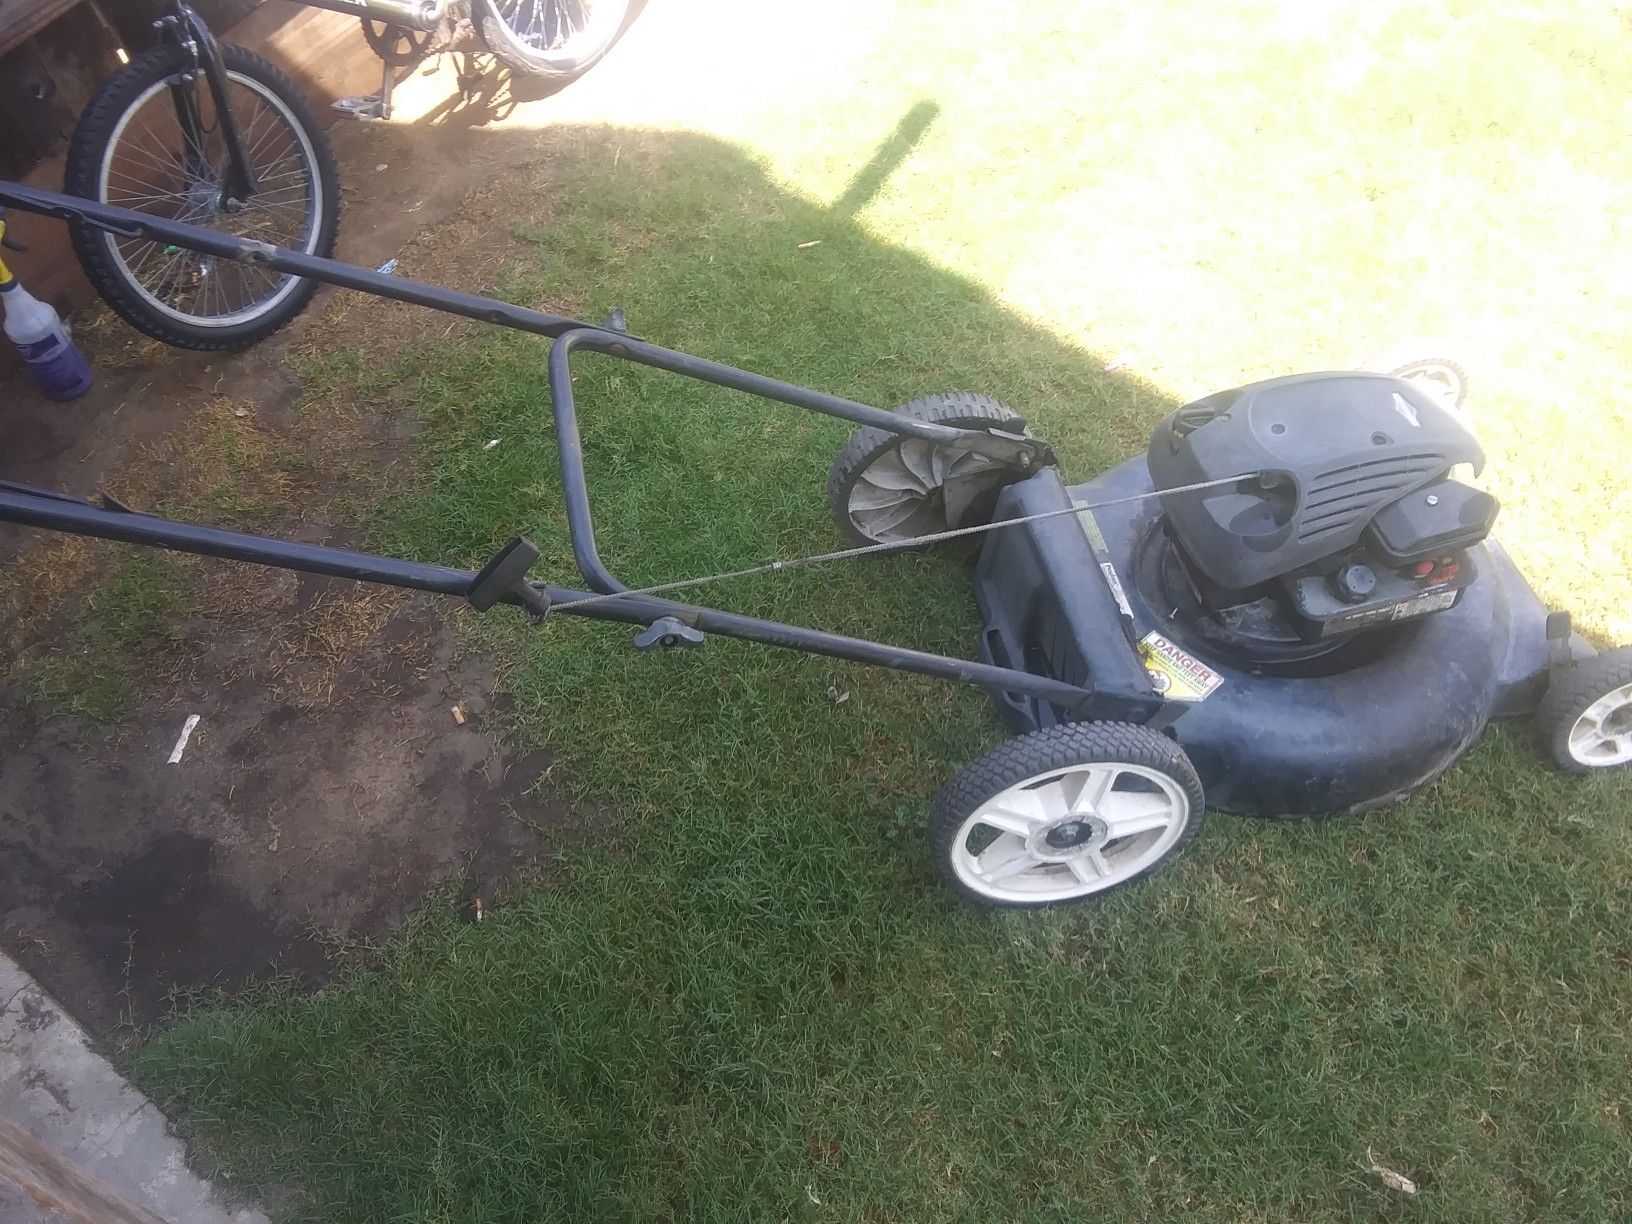 Lawn mower no bag